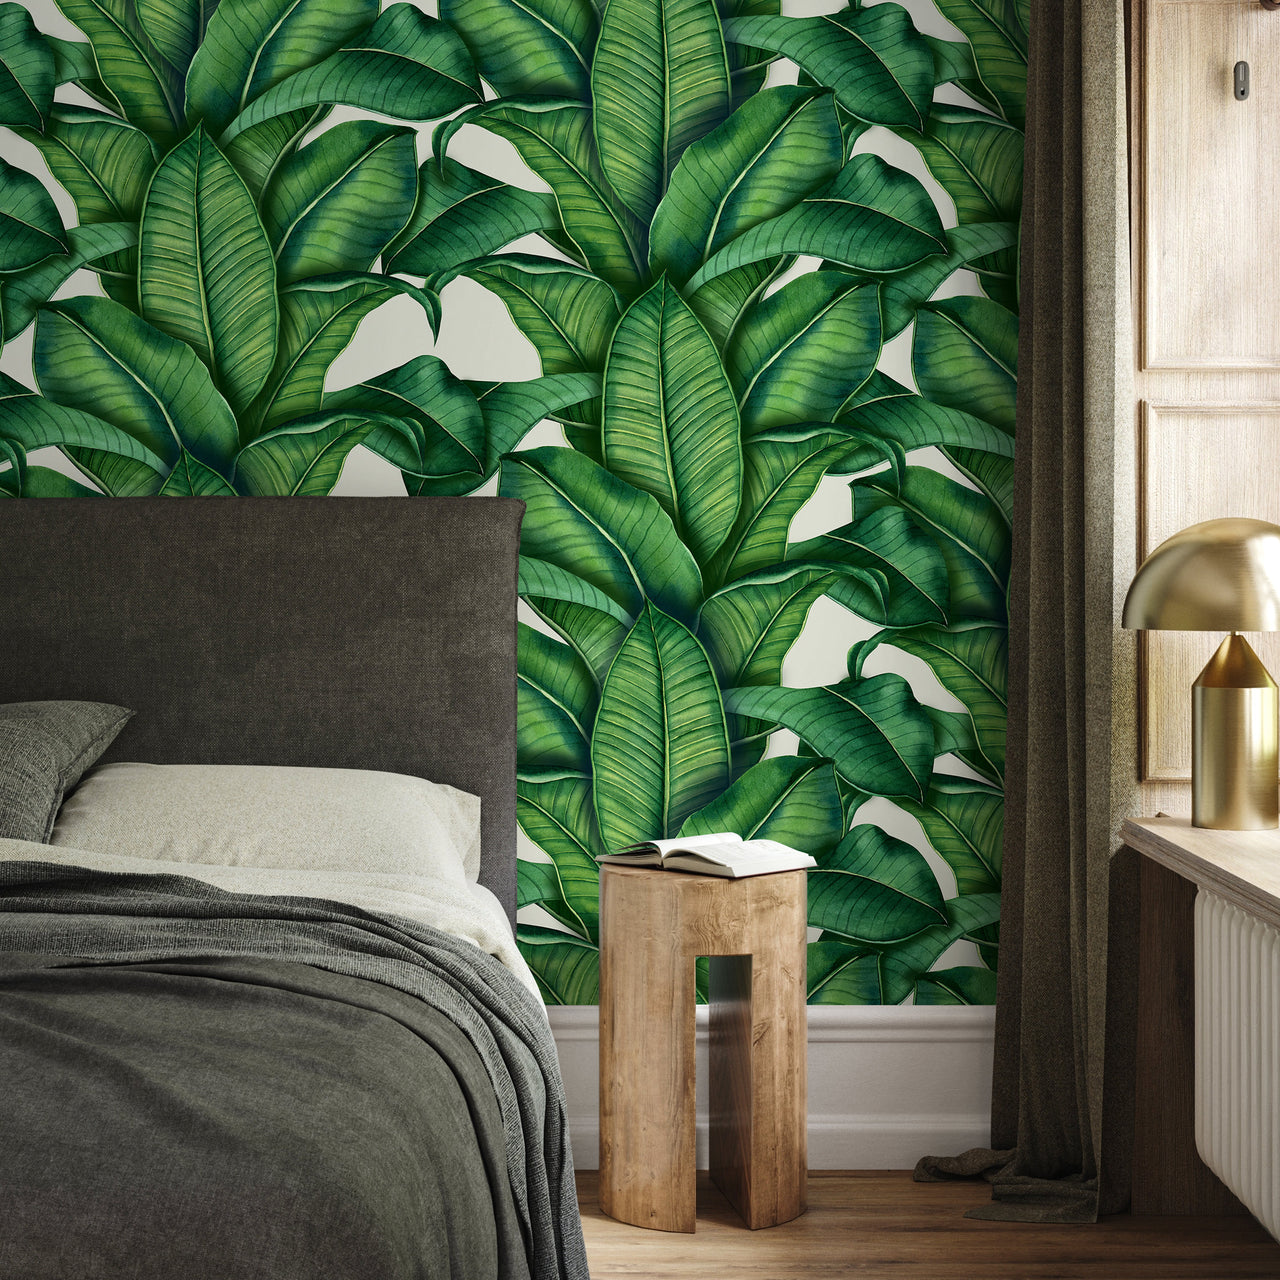 Wallpaper Peel and Stick Wallpaper Removable Wallpaper Home Decor Wall Art Wall Decor Room Decor / Tropical Banana Leaf Wallpaper - A256